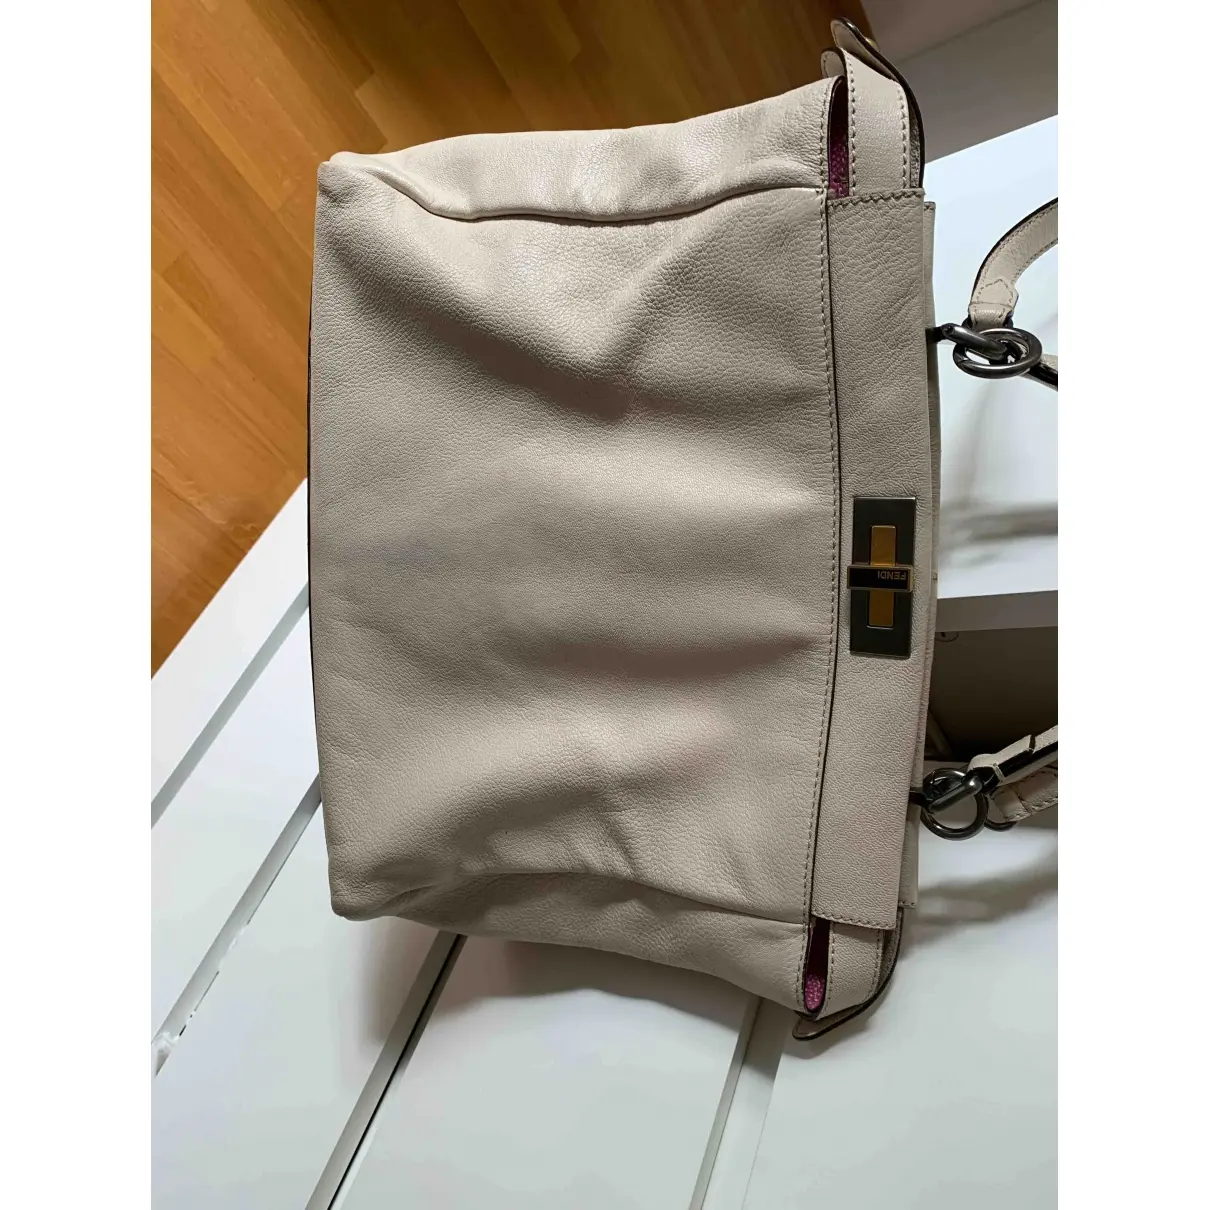 Fendi Peekaboo leather handbag for sale